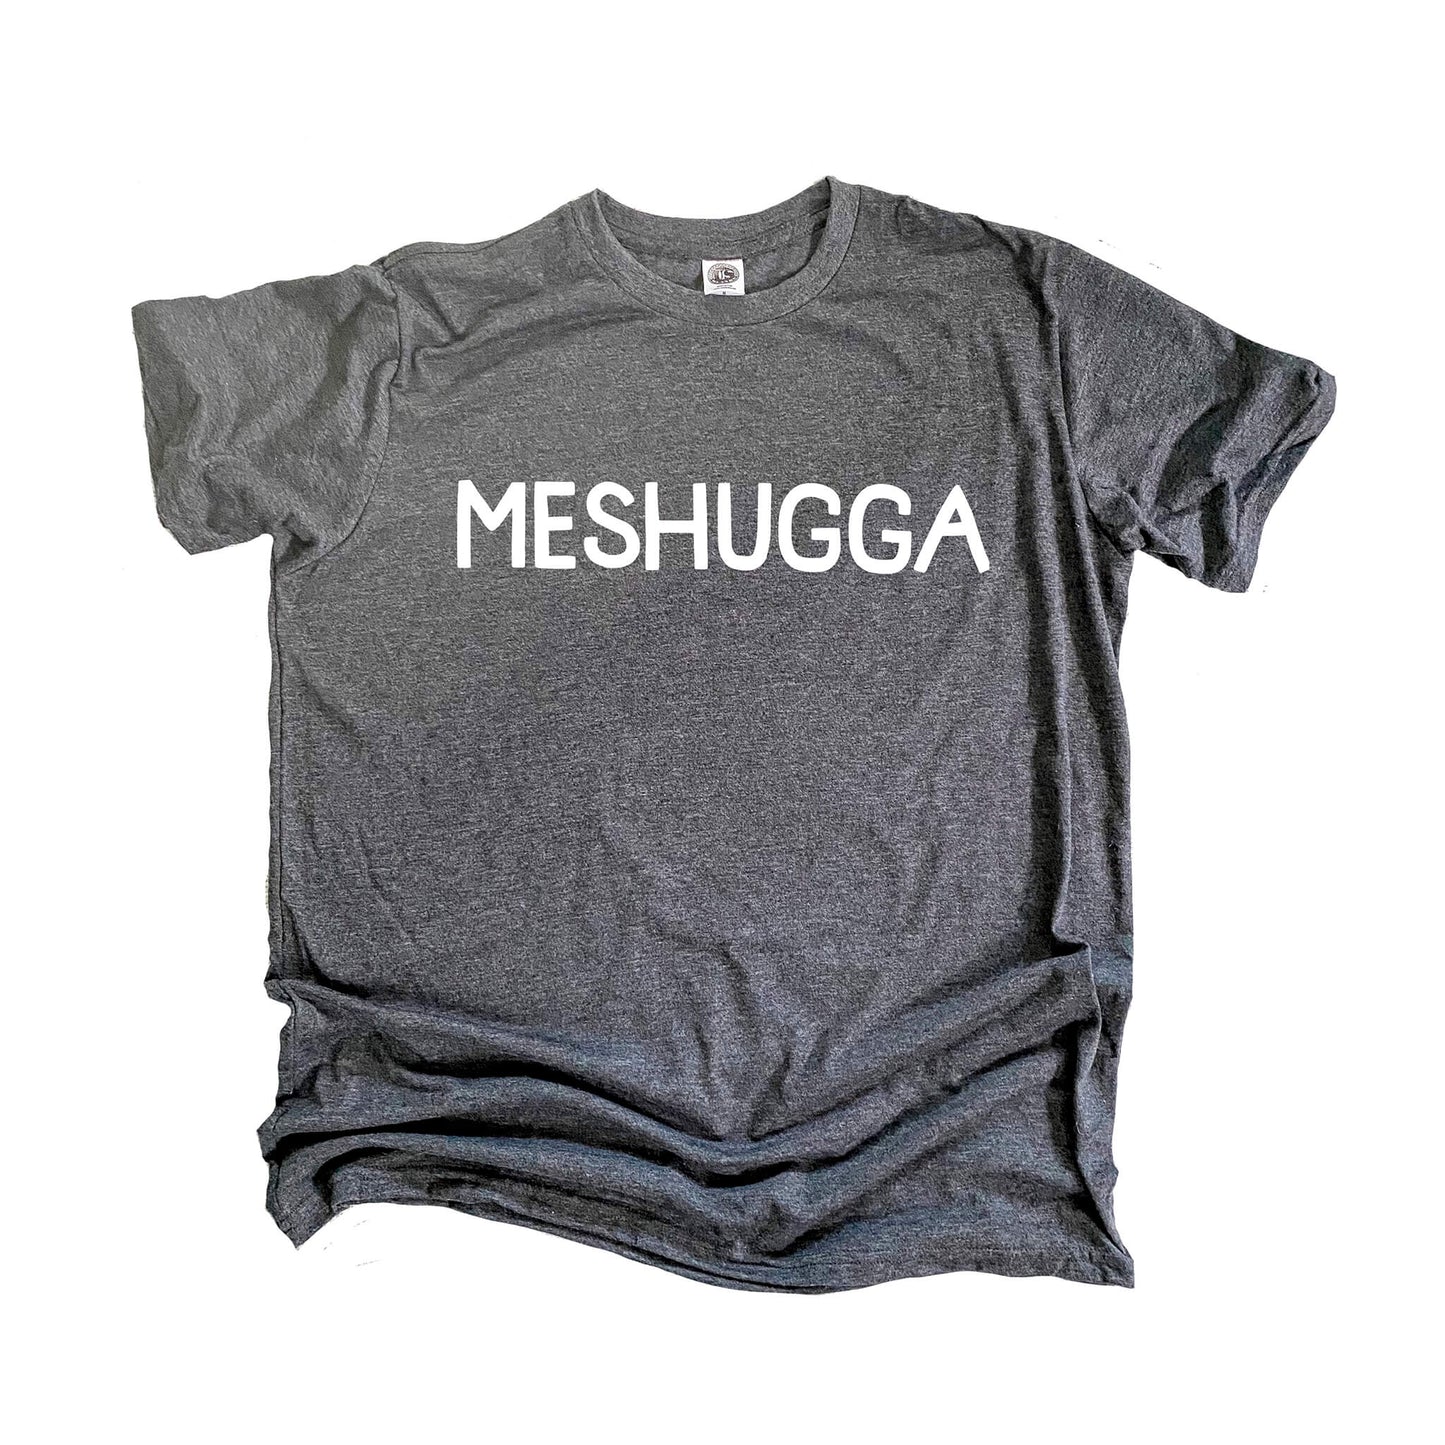 Meshugga T-shirt